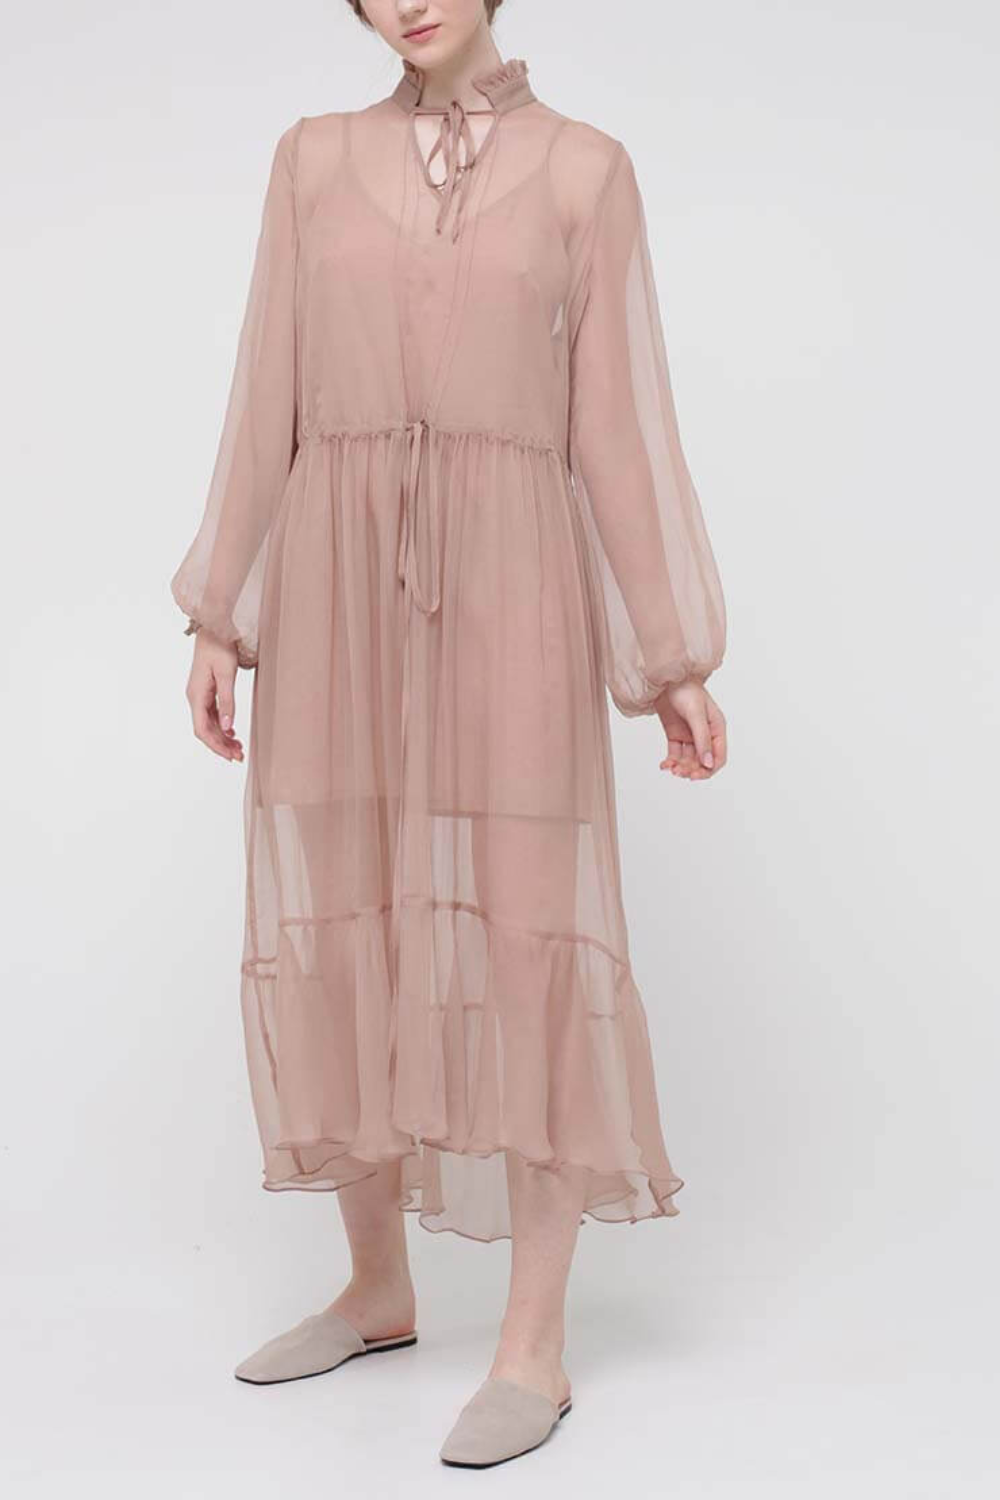 Chiffon midi dress with ruffle at the bottom, beige, (MissSecret), DR-018-beige